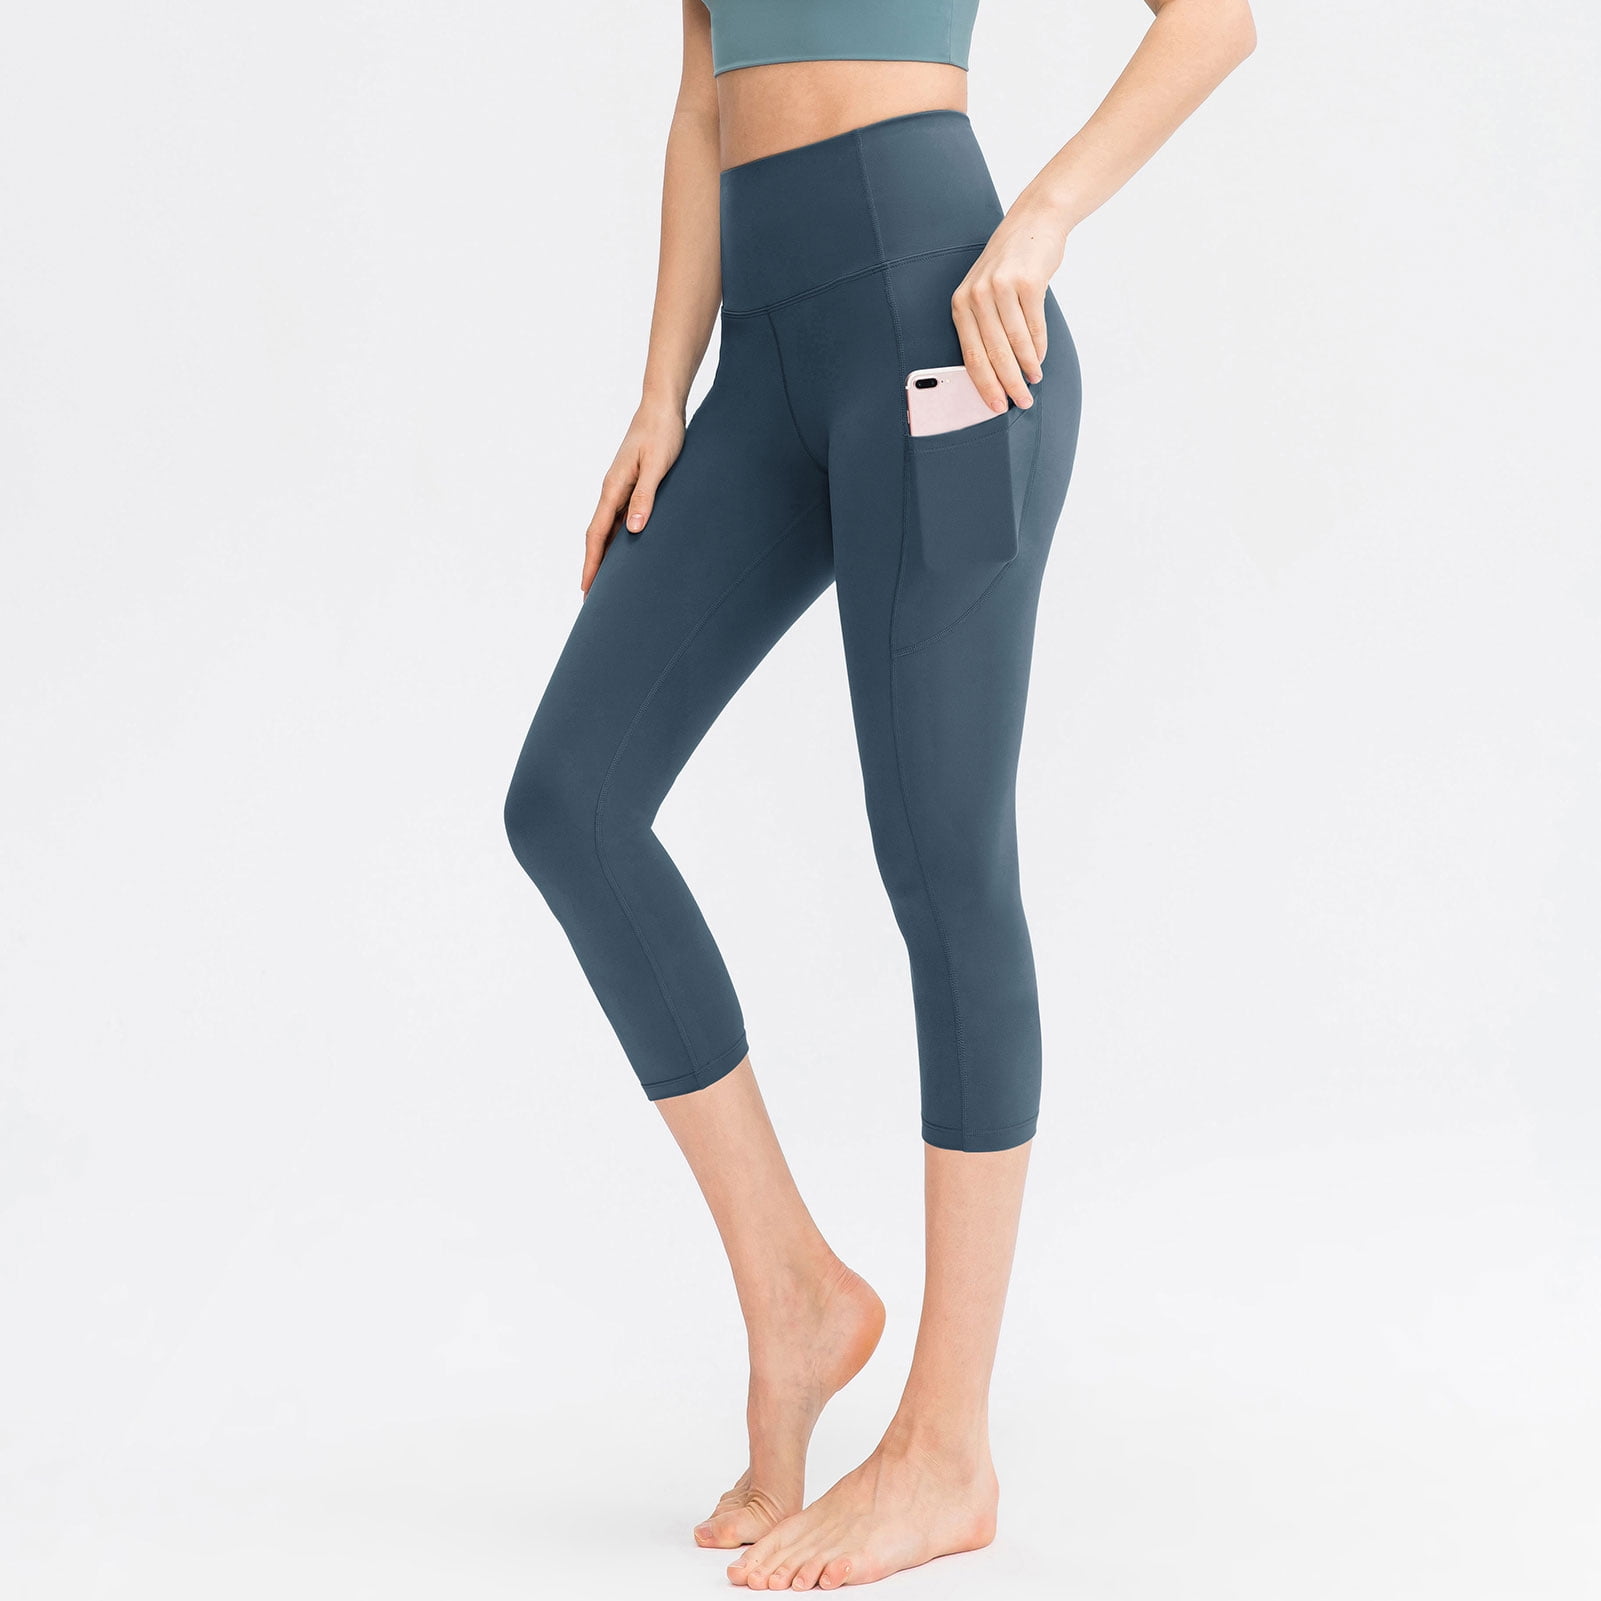 Details about   Premium Quality Yoga Pants Women High Waist Quick-dry Sports Workout Leggings 